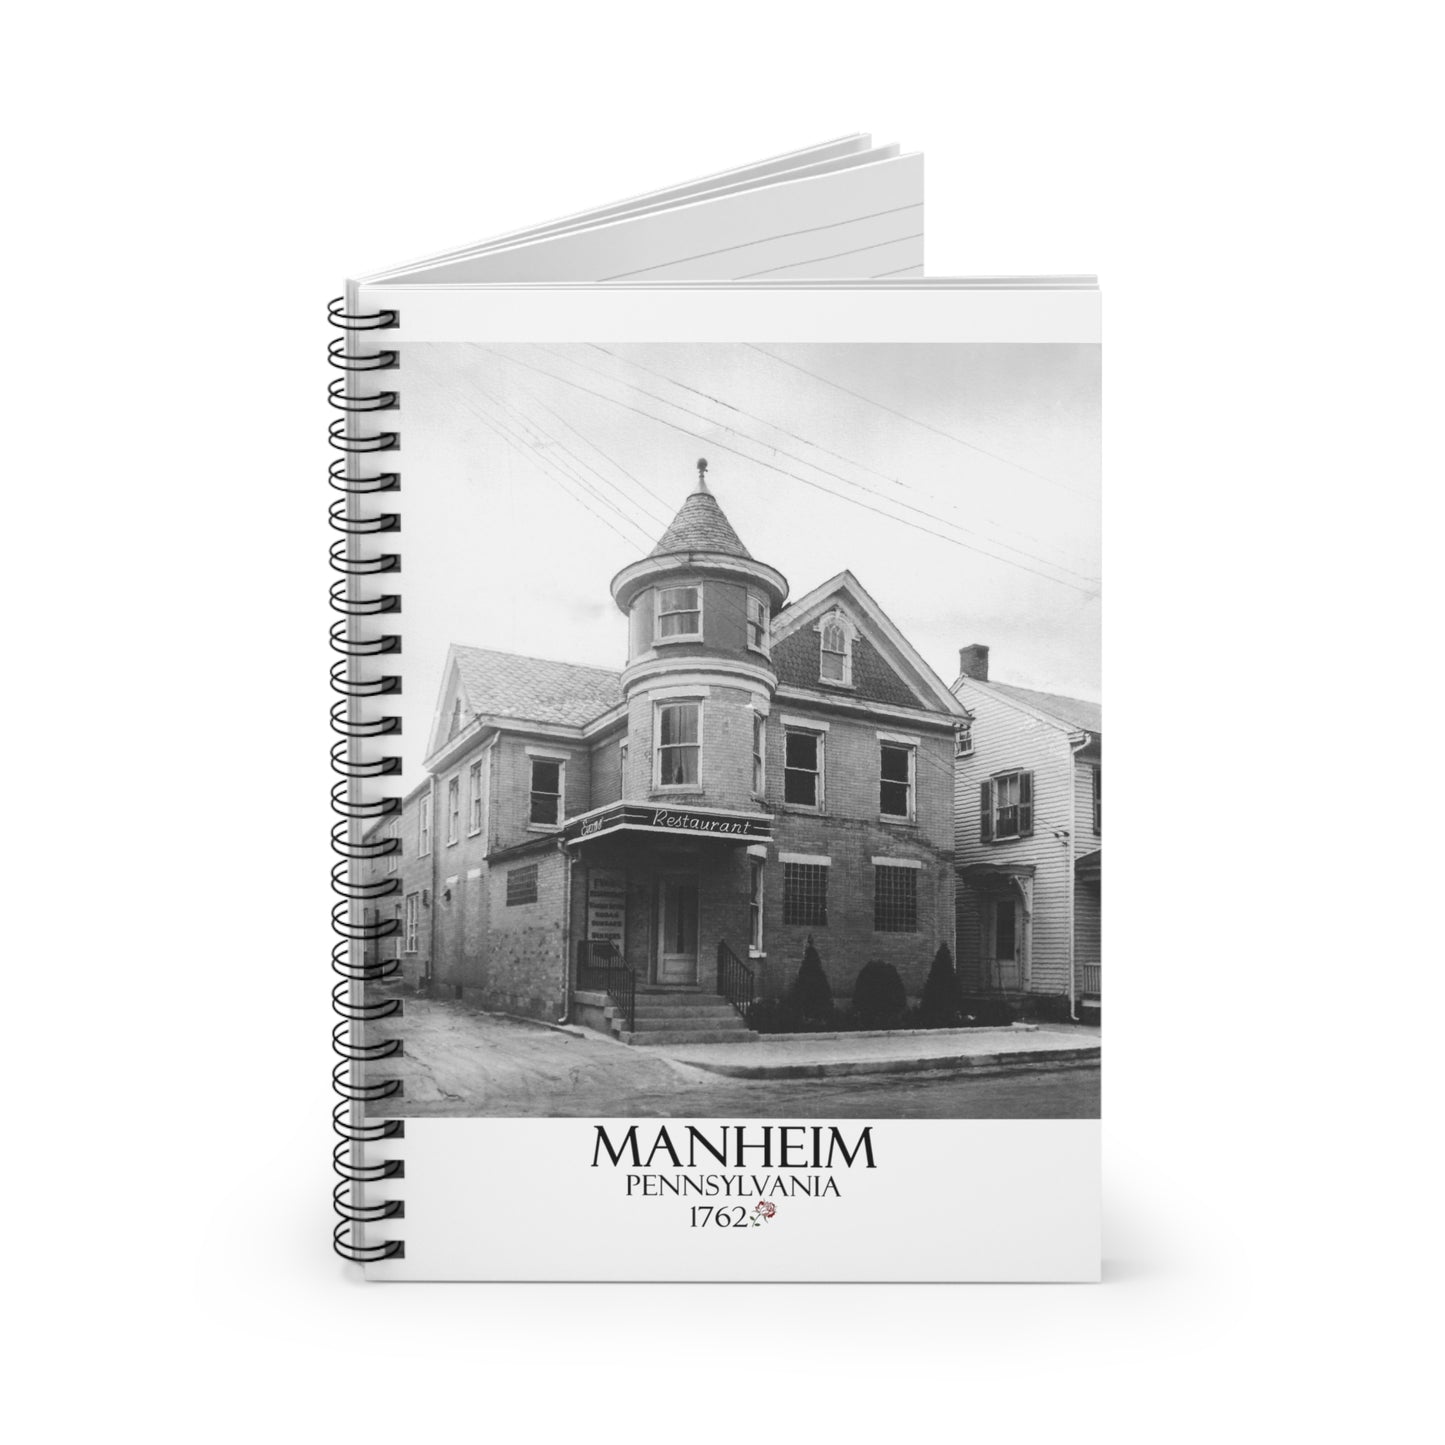 Historical Photograph - Manheim Pennsylvania - Spiral Notebook - Ruled Line